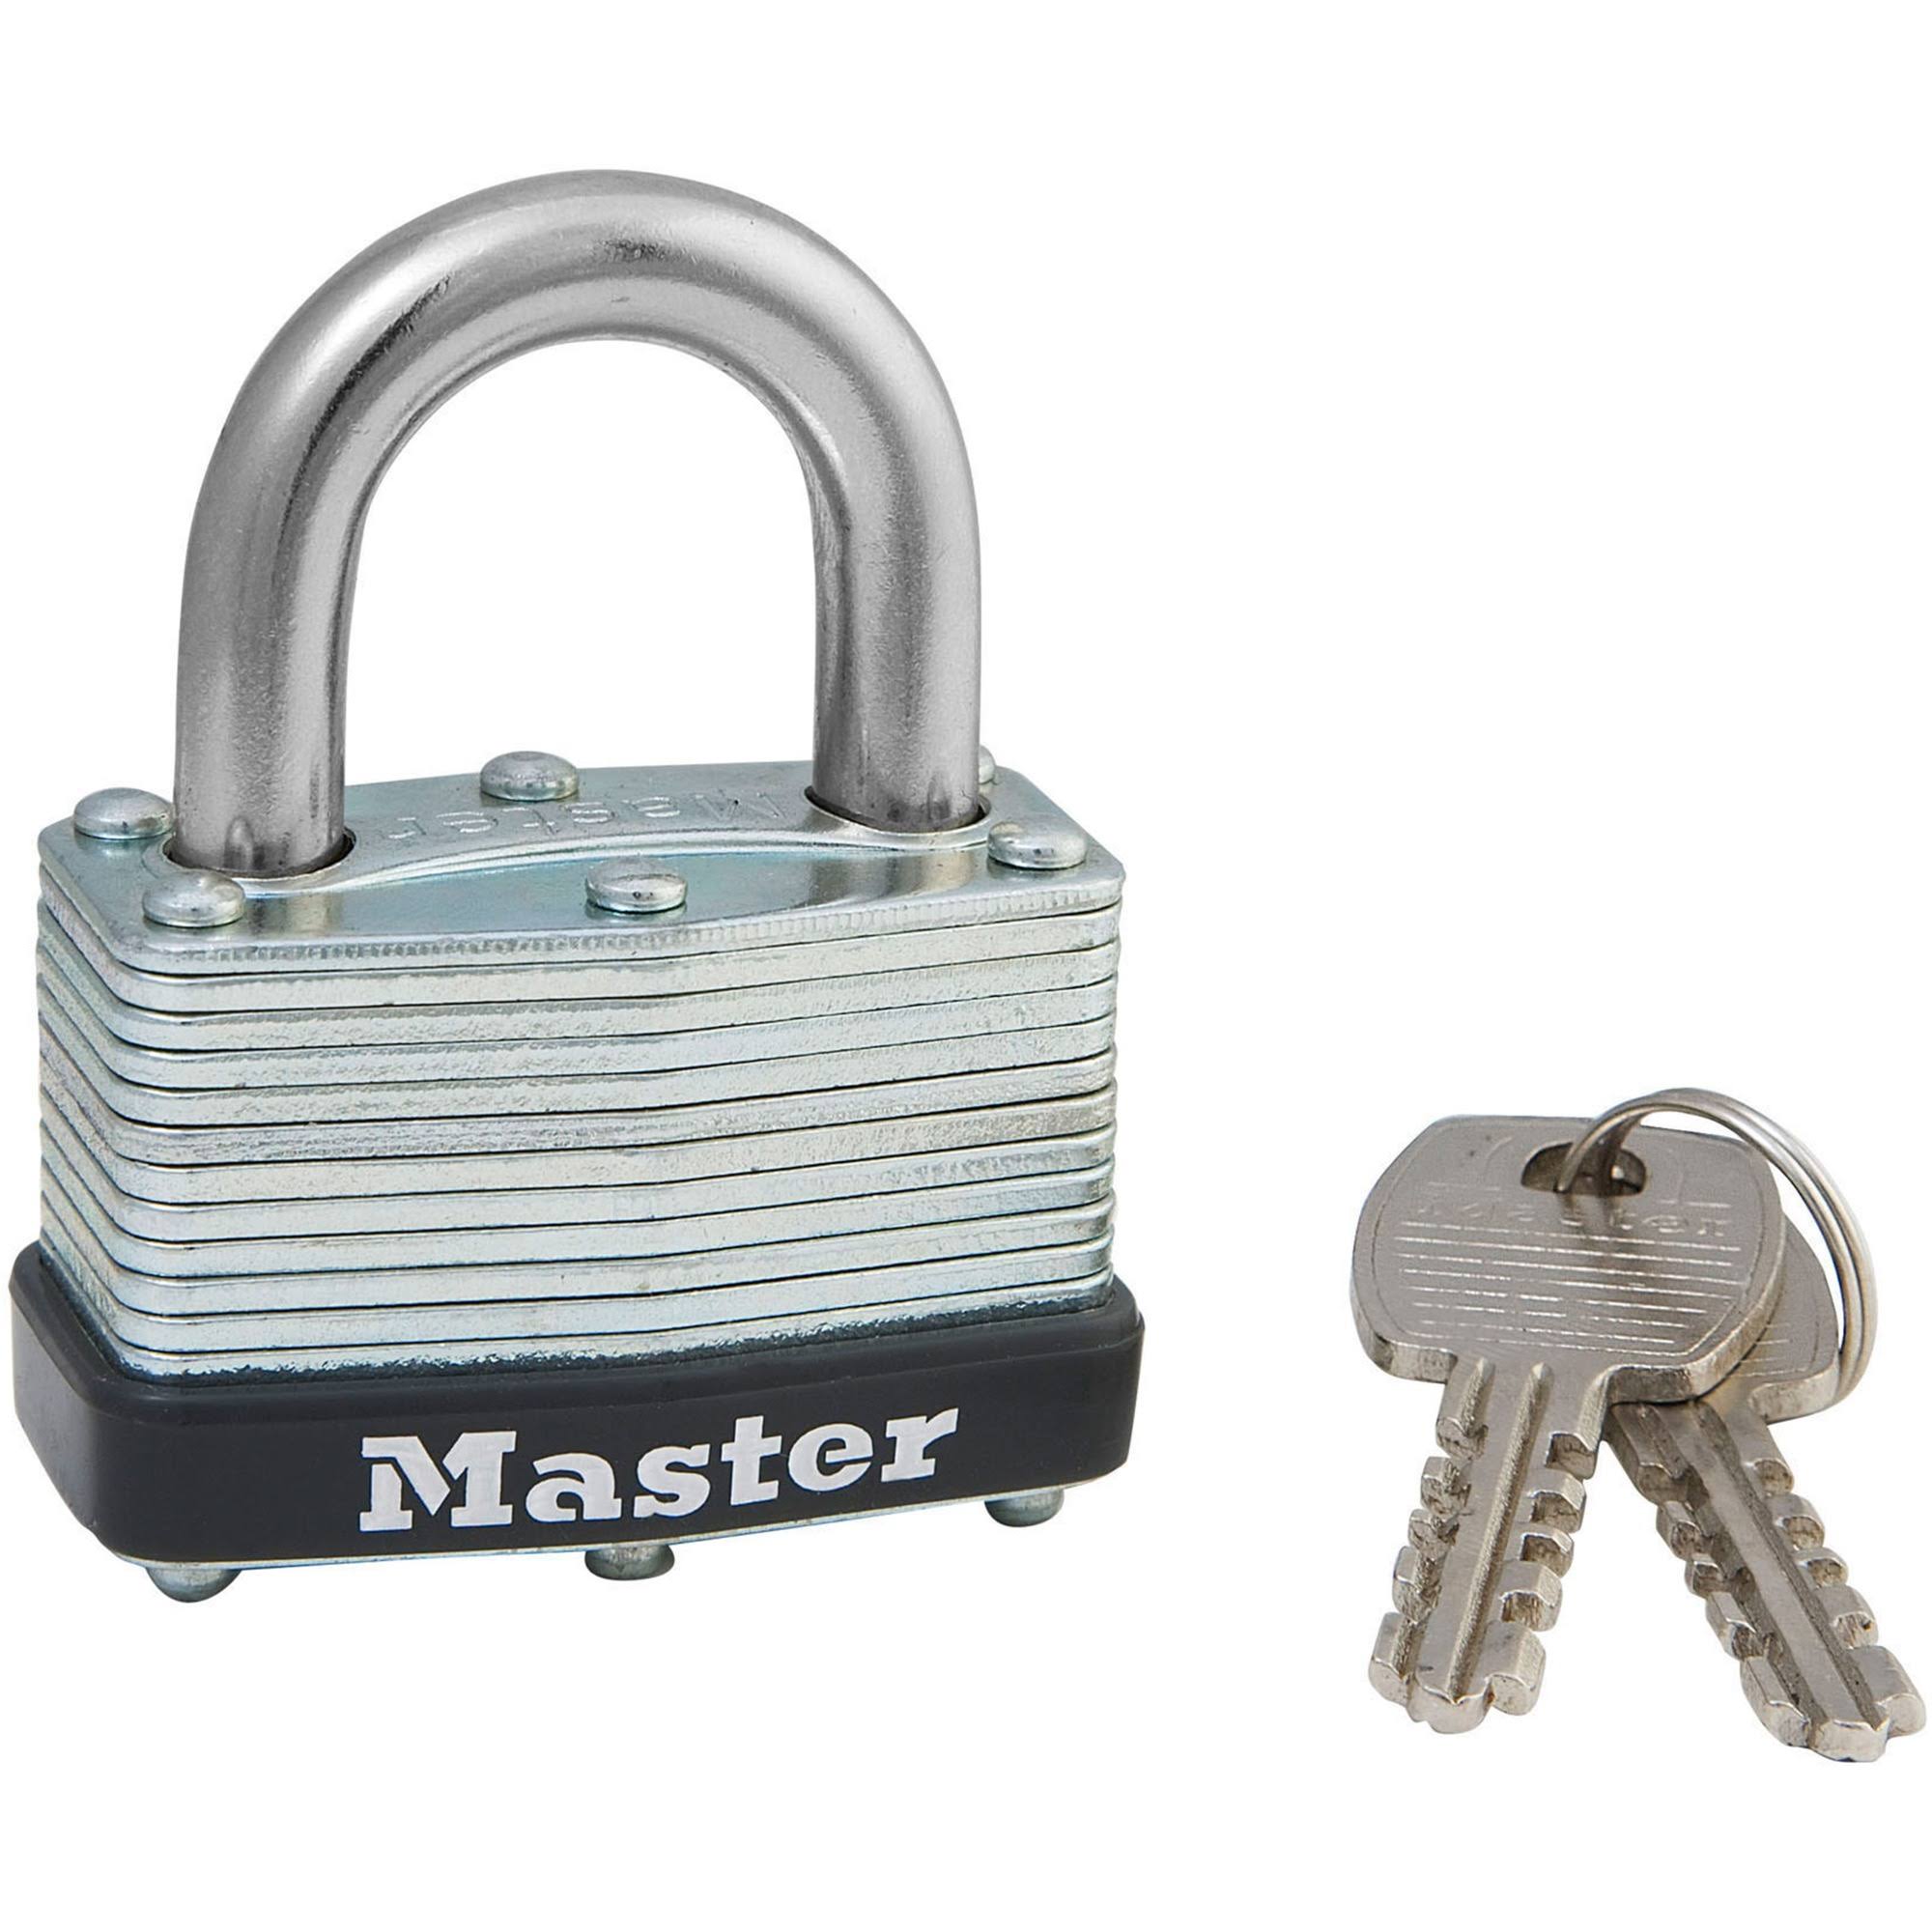 Master Lock Warded Padlock - Steel, 1-3/4"